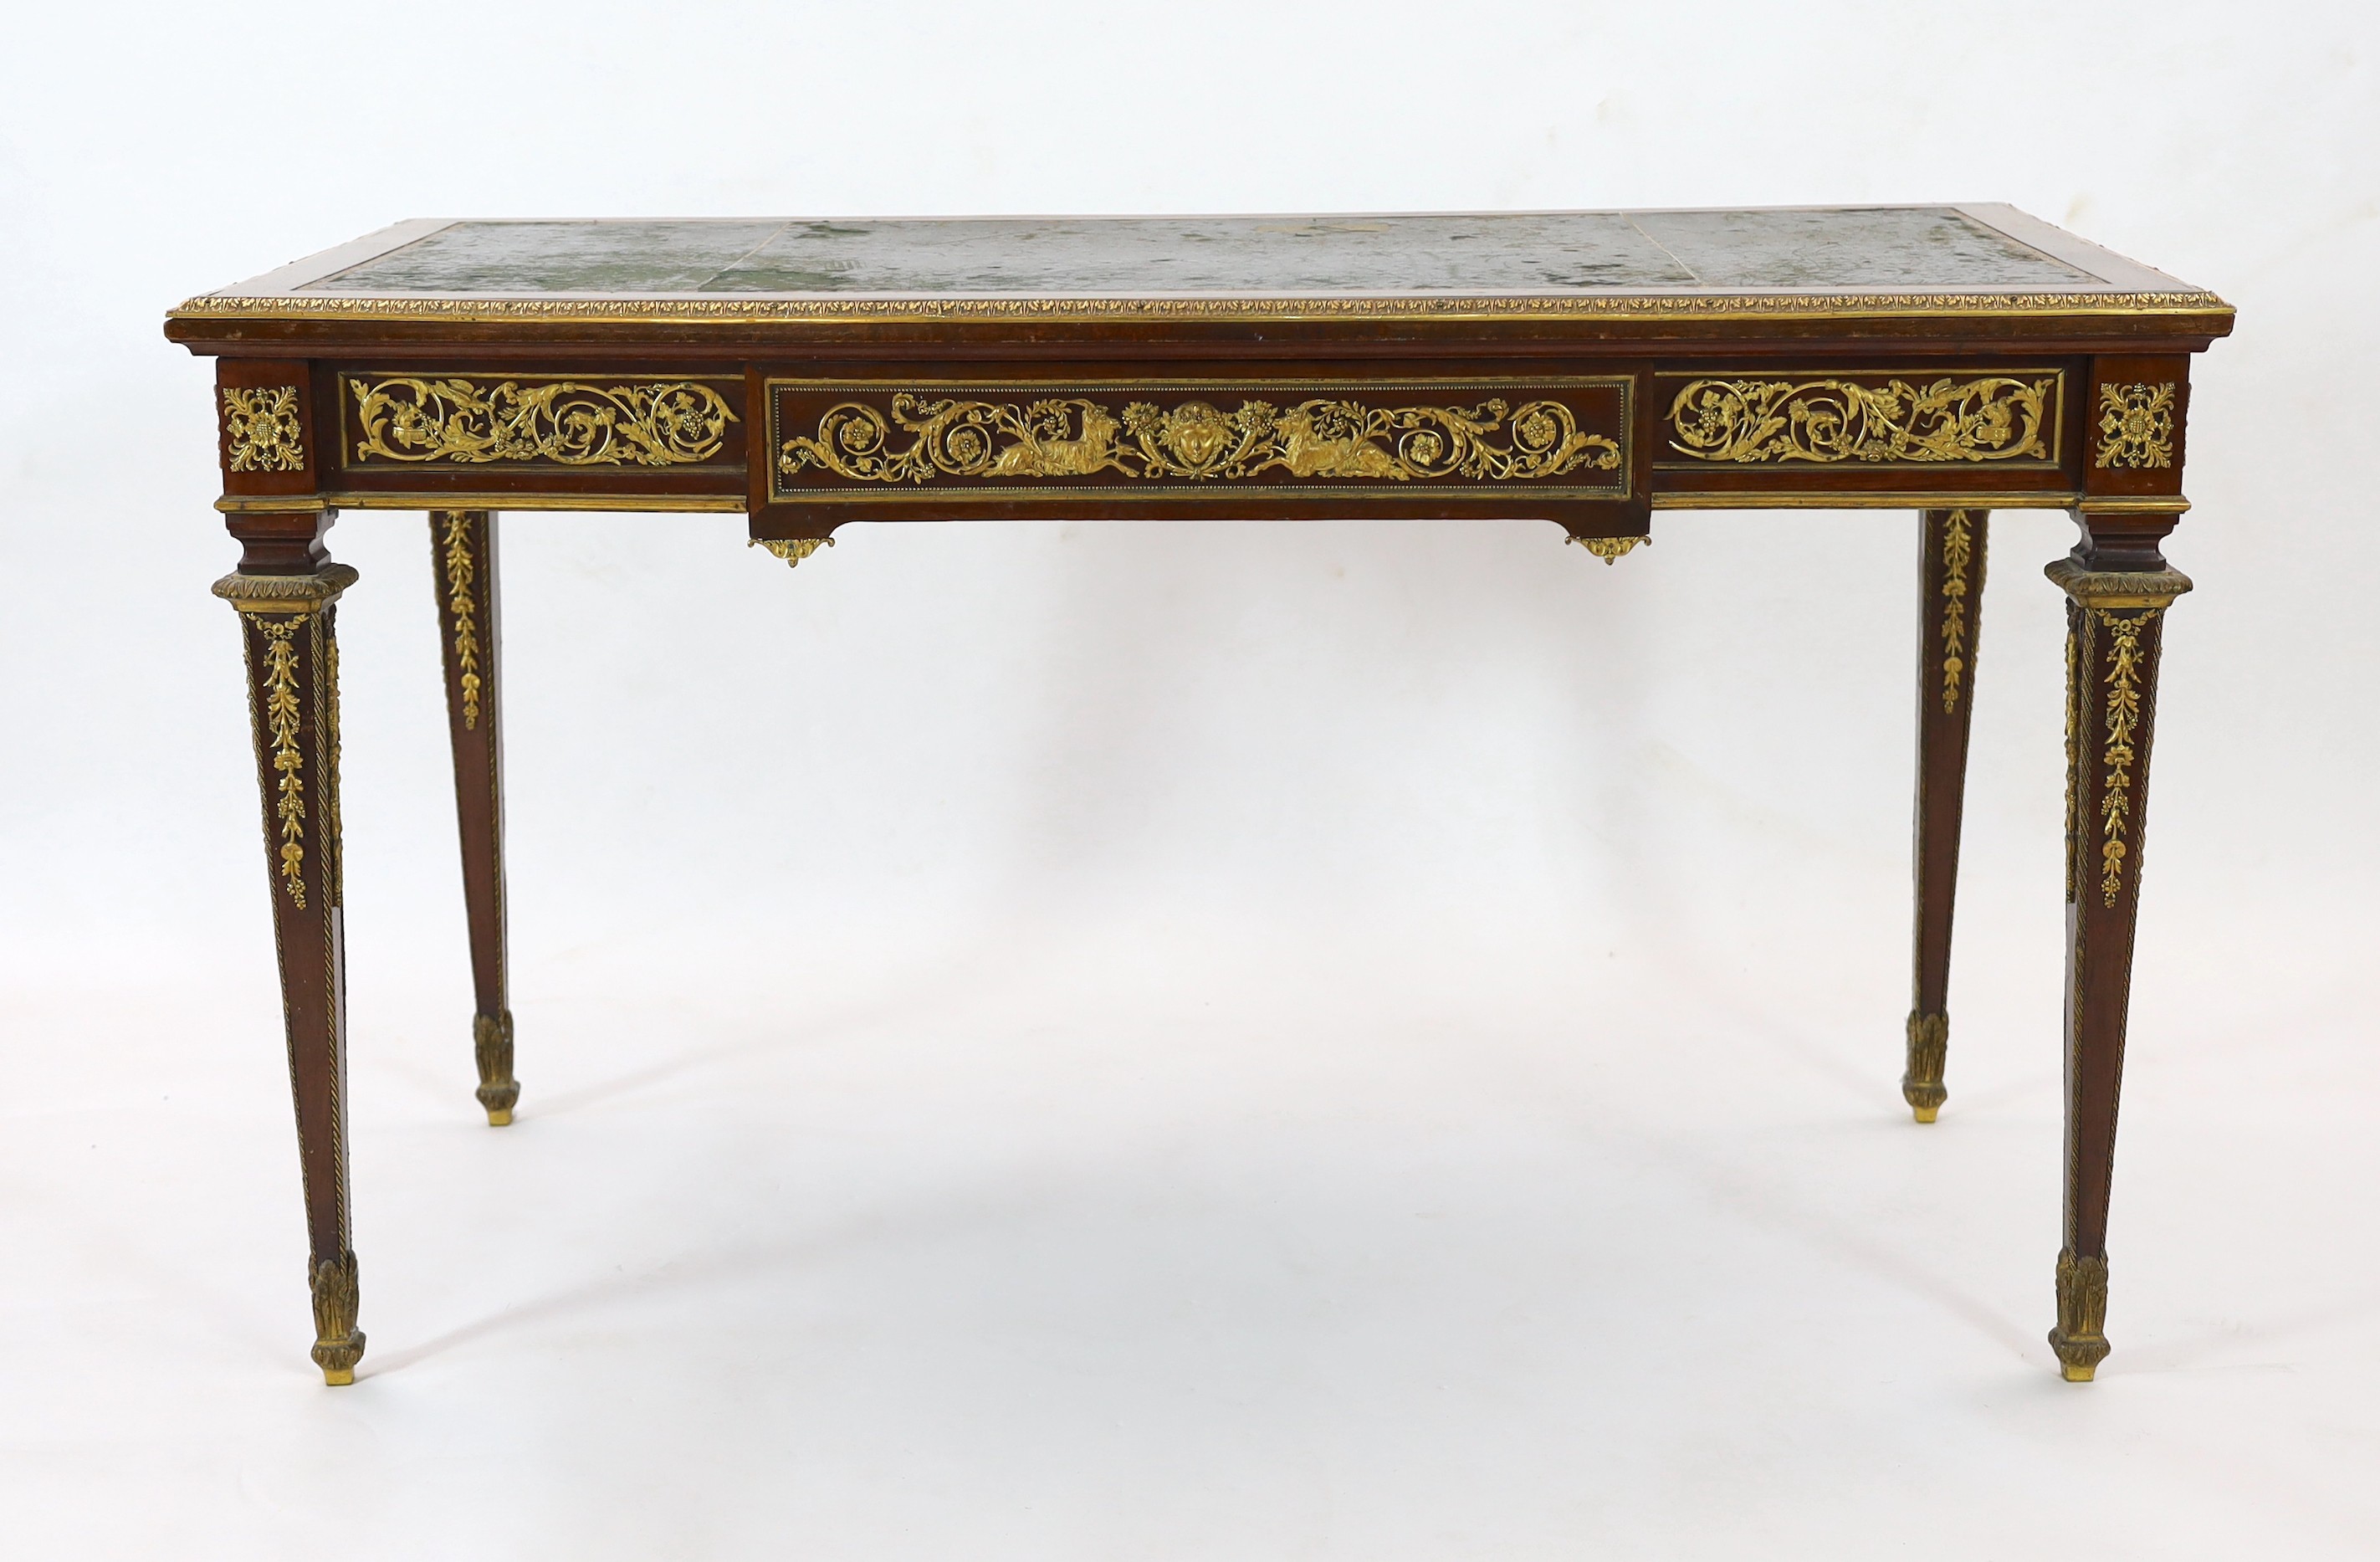 Francois Linke. A Louis XVI style gilt bronze mounted mahogany bureau plat, width 129cm depth 66cm height 74cm